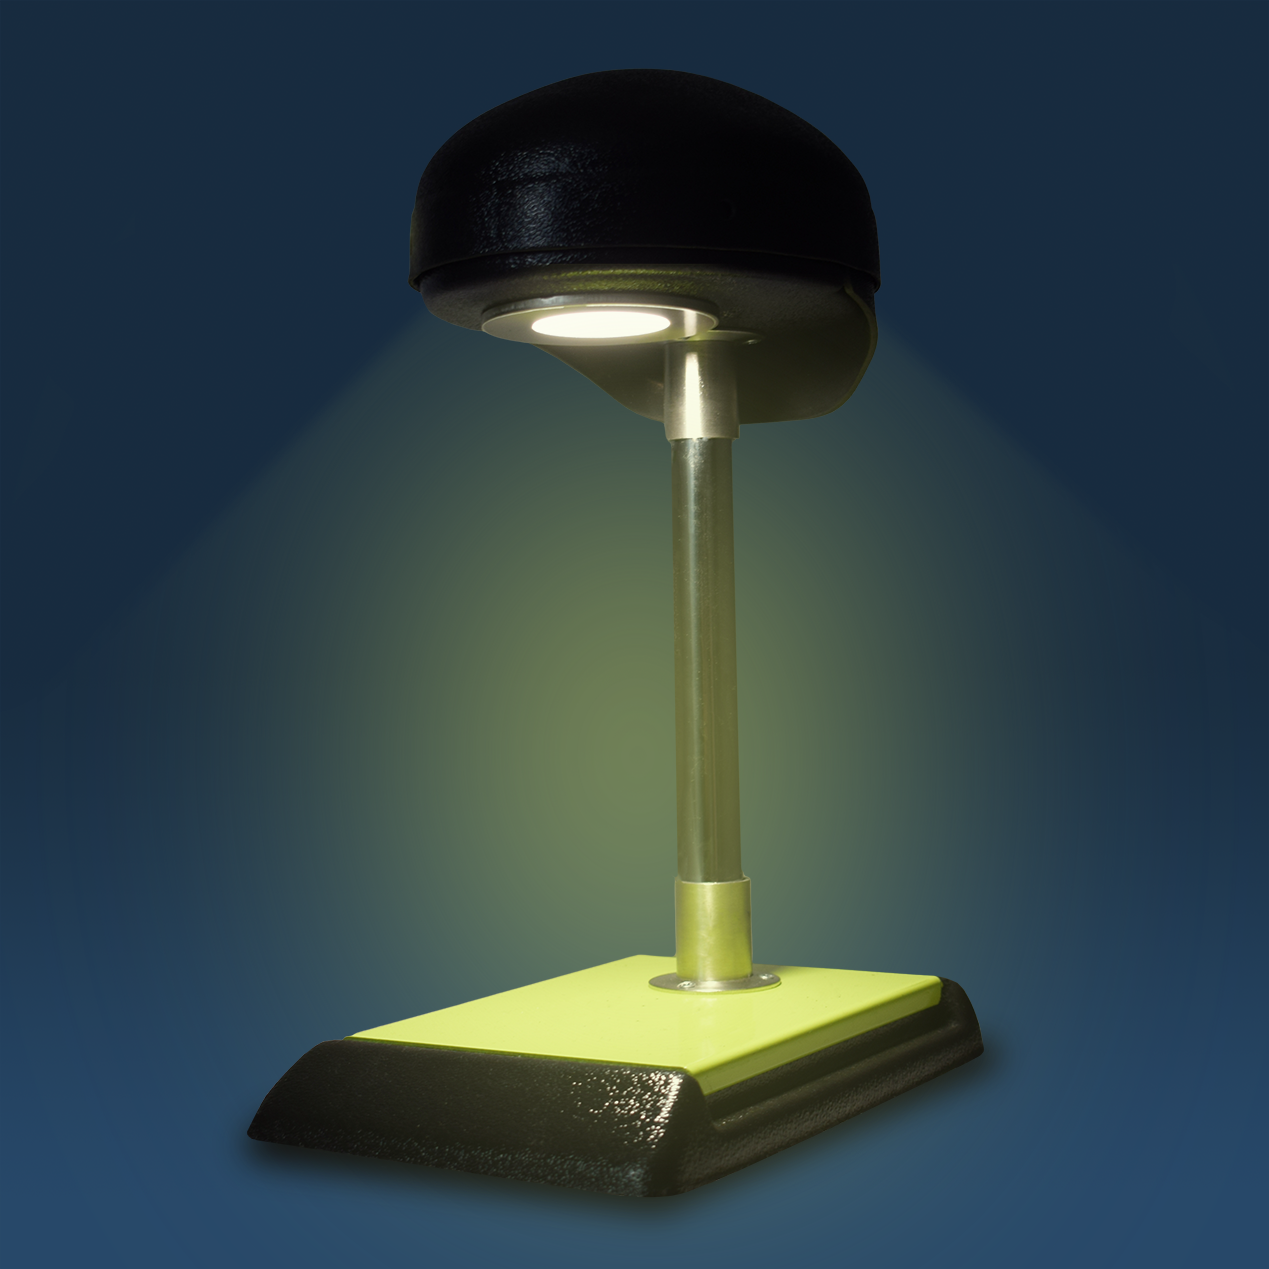 LED Lamp Stand Display